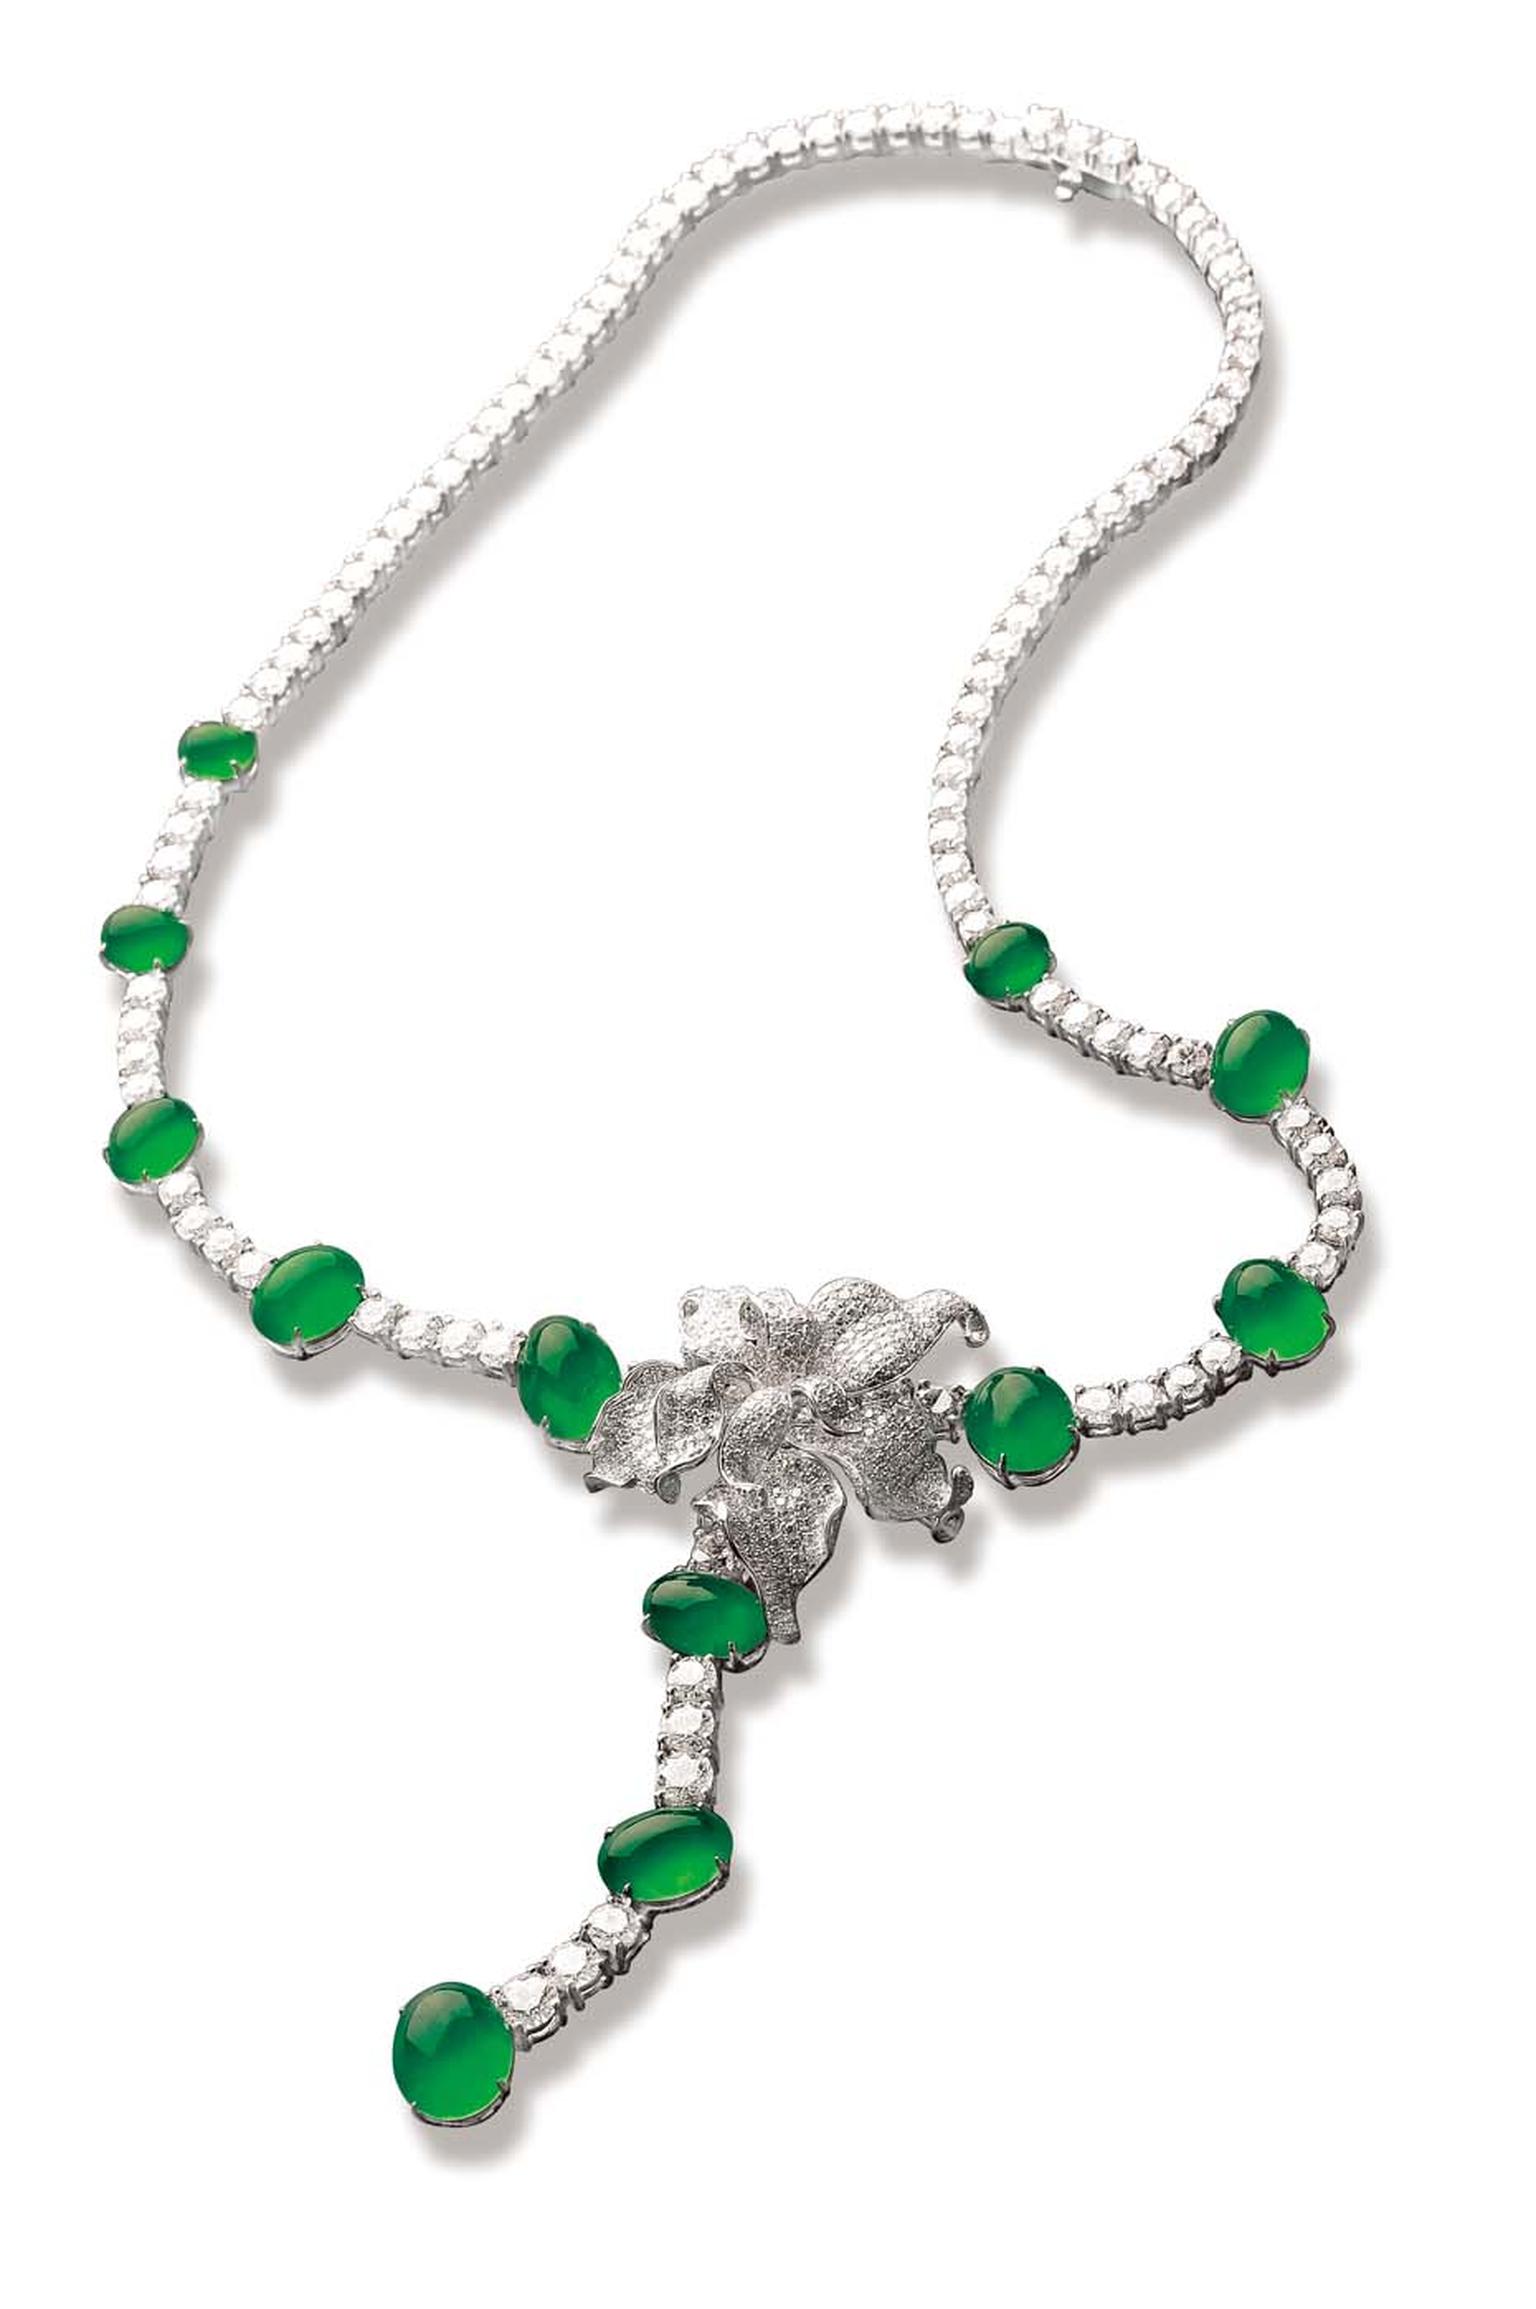 Zhaoyi Dancing Green Bird necklace set with diamonds and 12 vivid green jade cabochons.